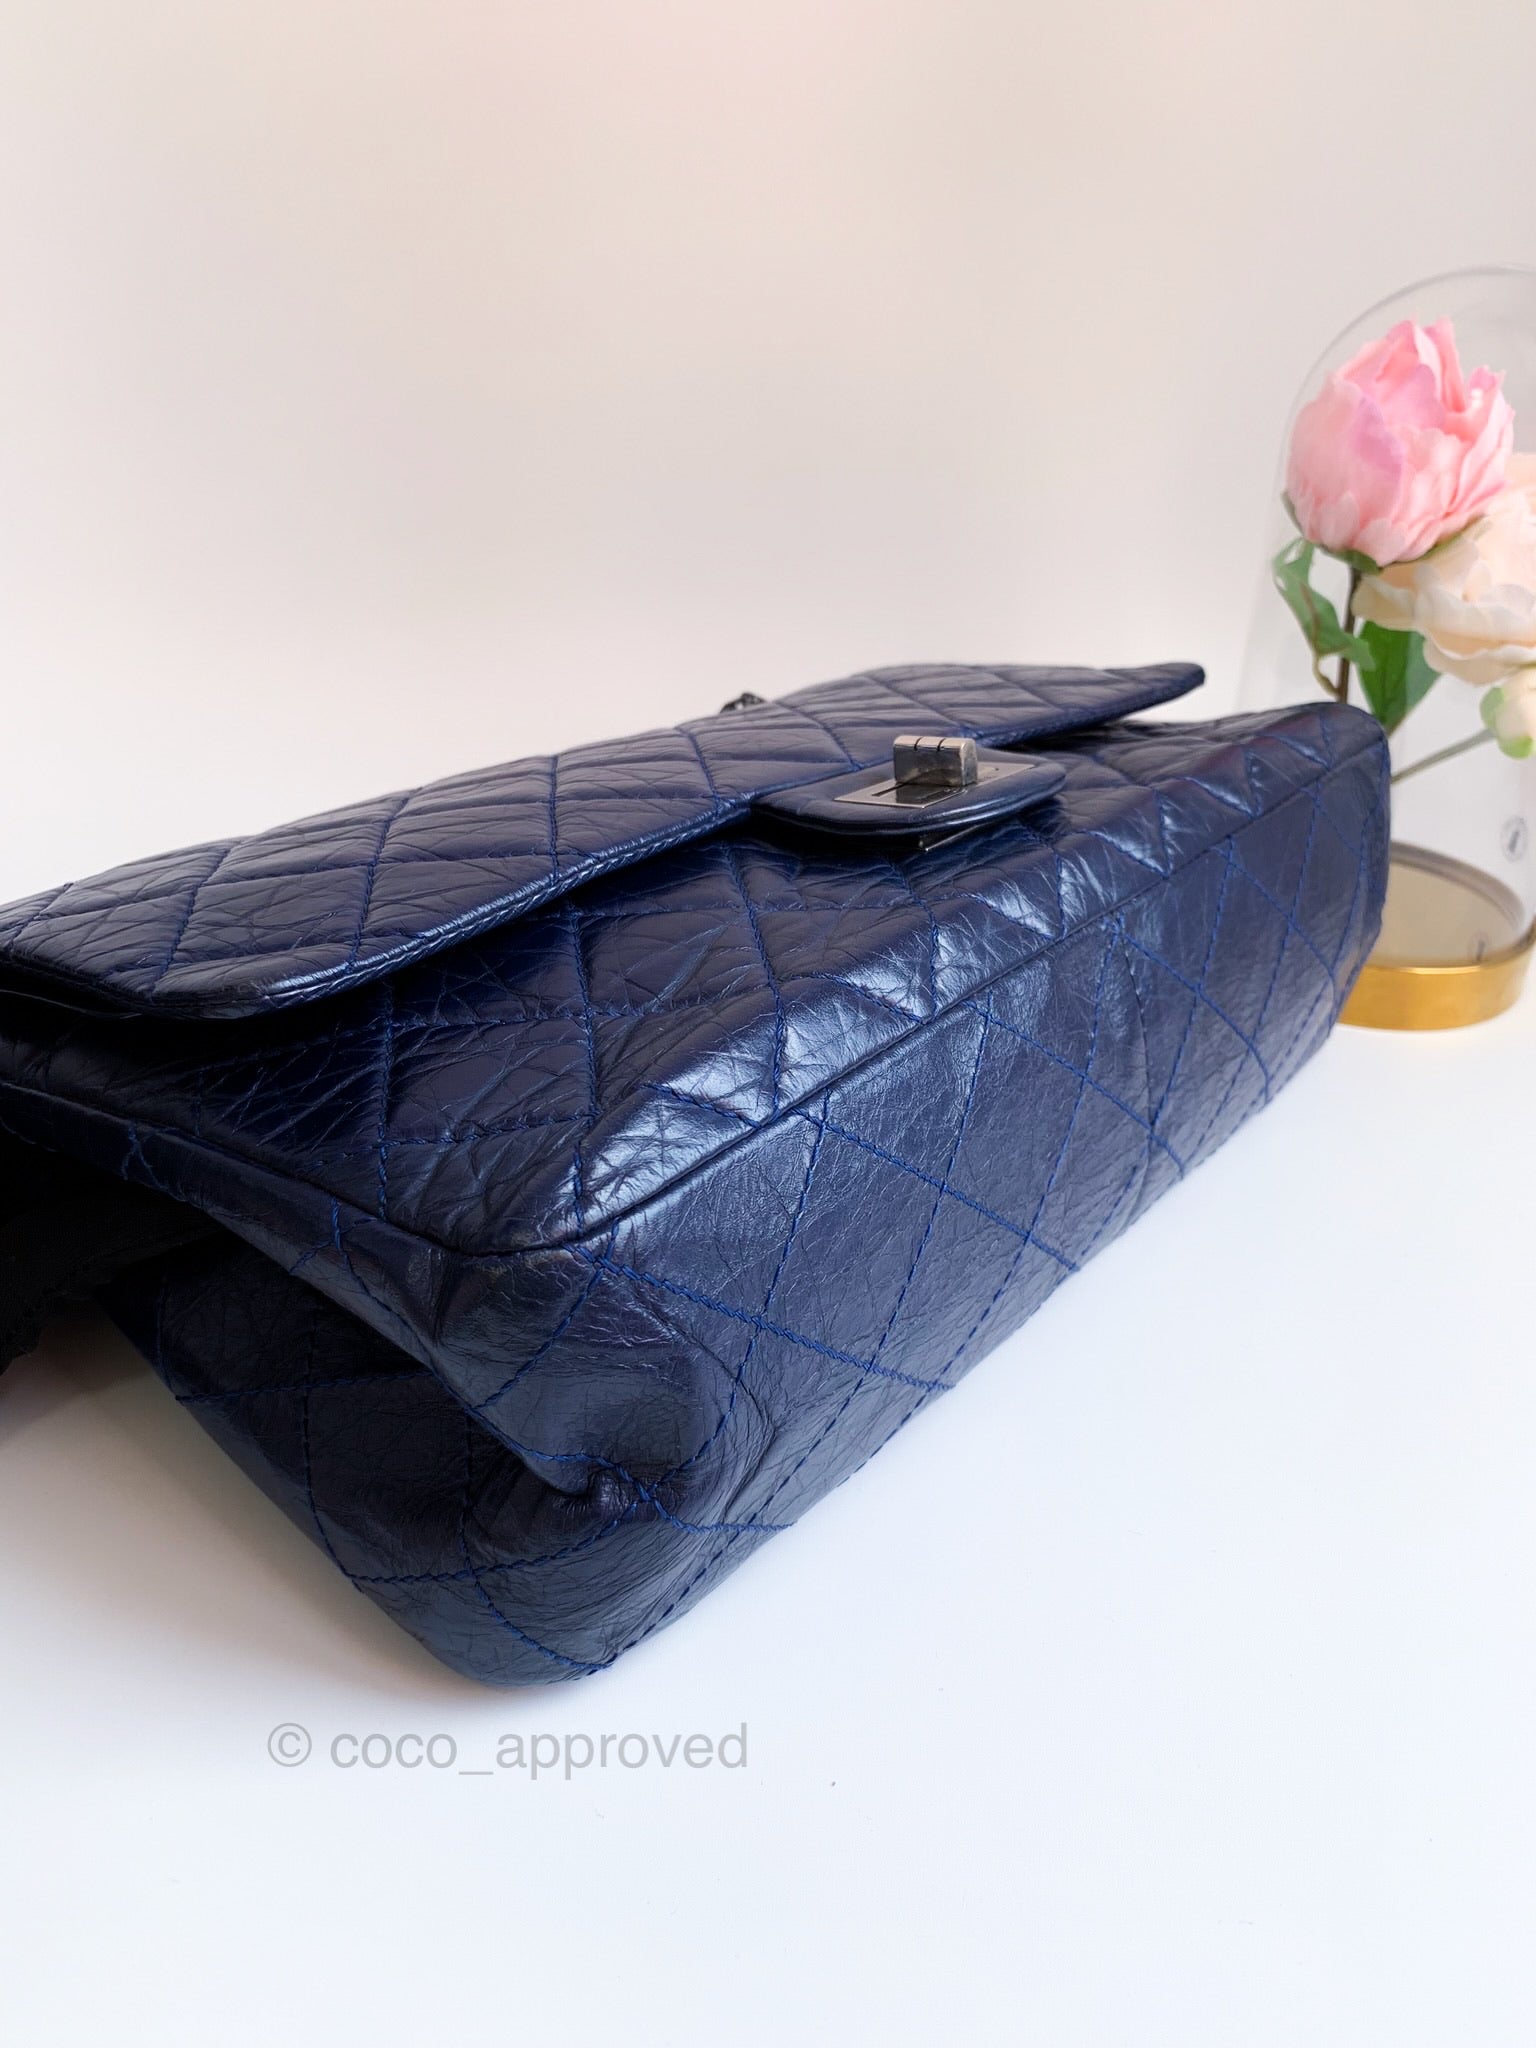 Chanel Square Quilt Reissue Multi-Pocket Flap Bag - ShopStyle